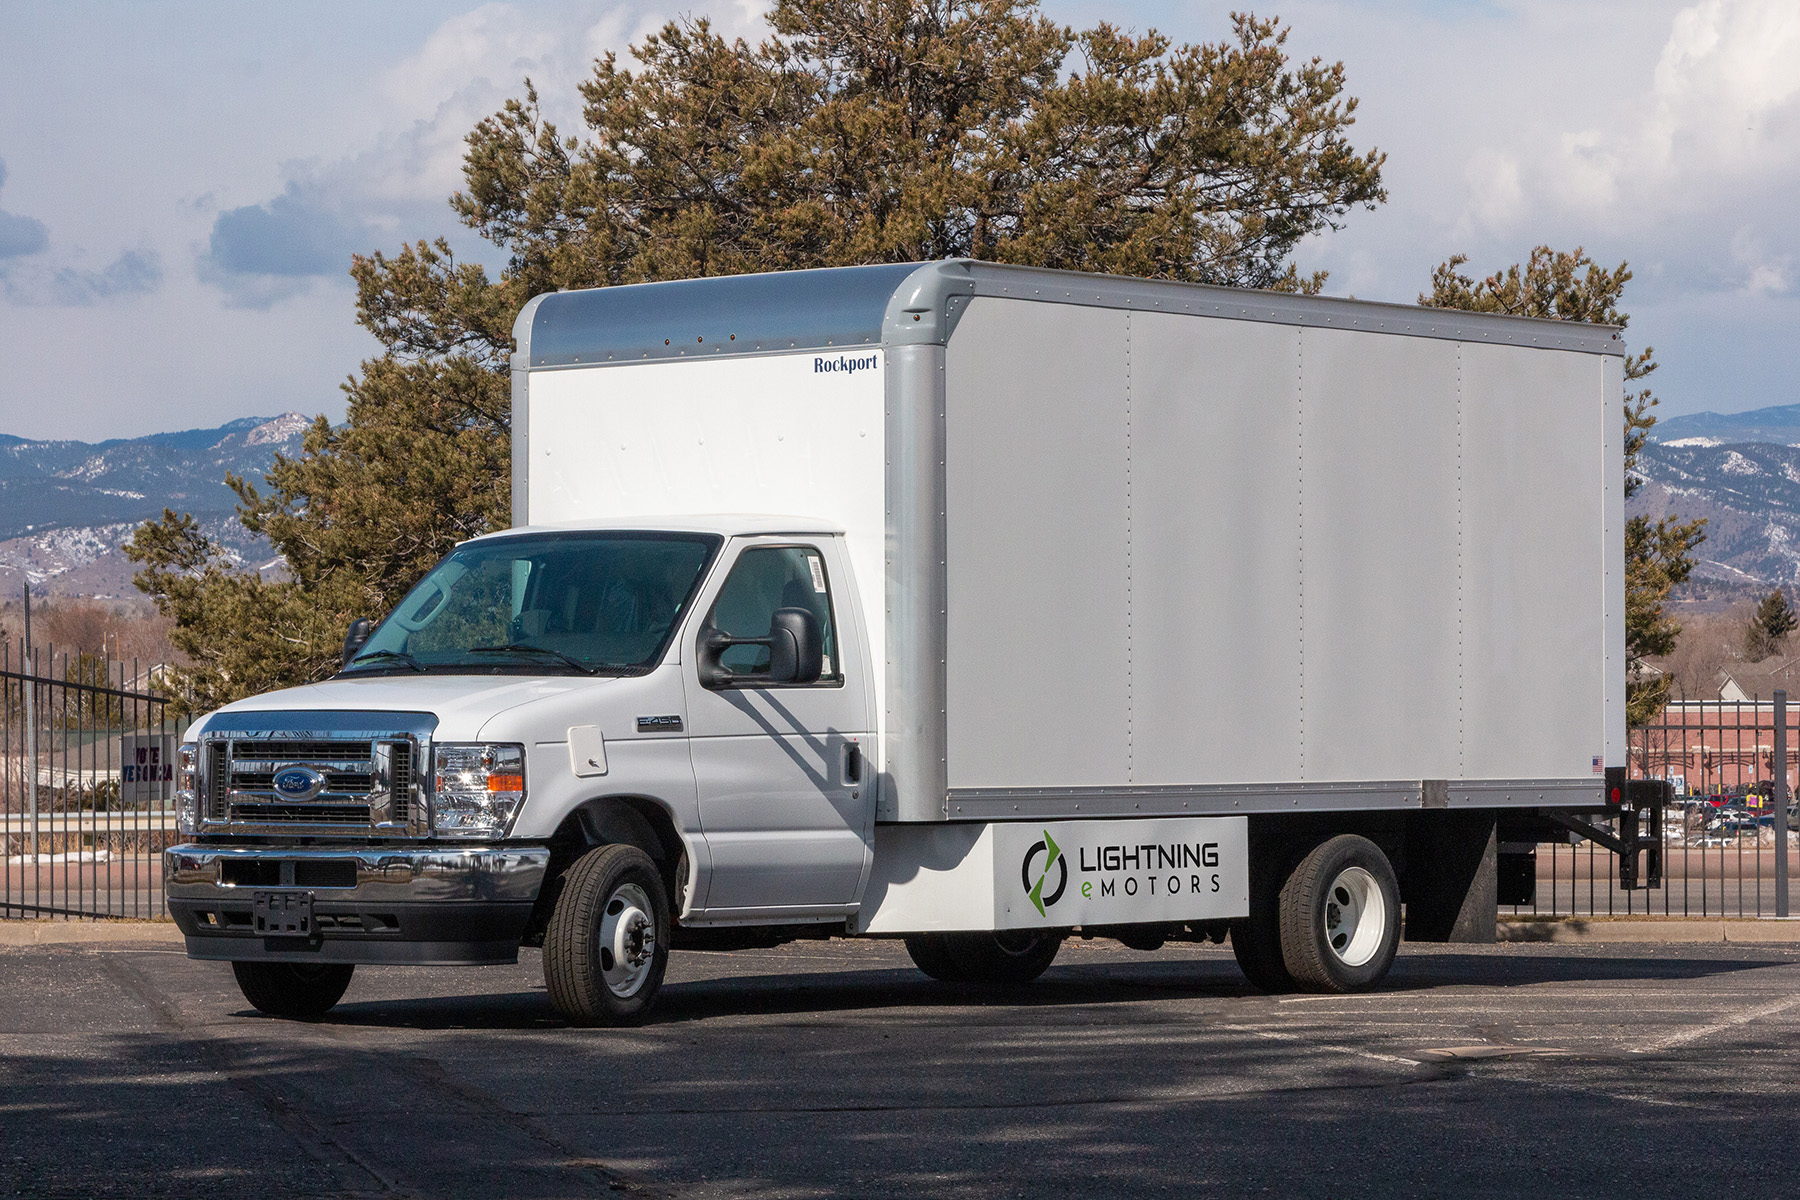 Fluid Truck Orders 40 Additional Zero Emission Trucks from Lightning eMotors